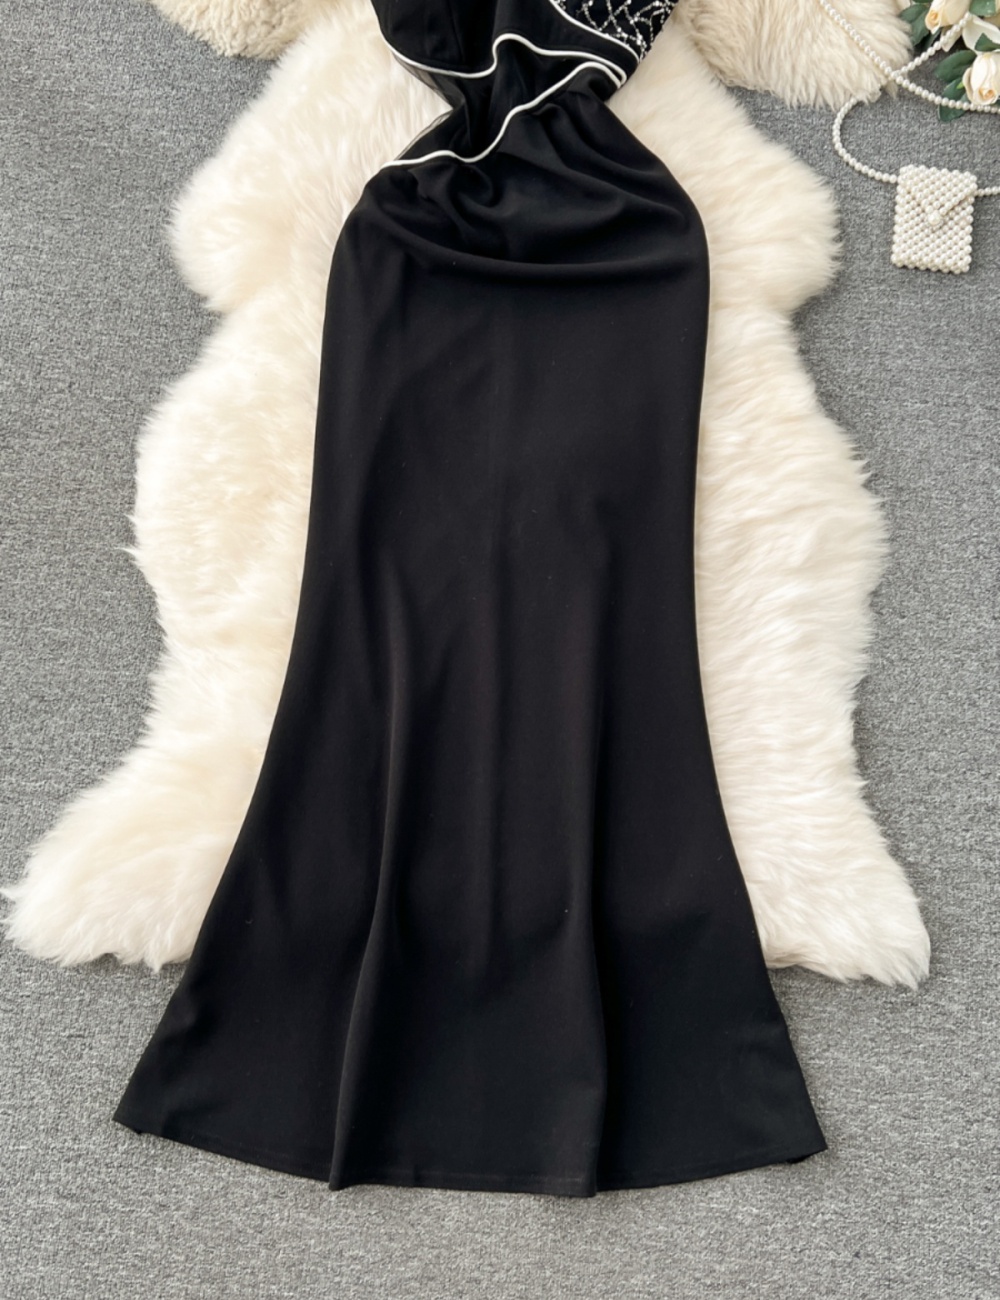 Long sequins formal dress light dress for women